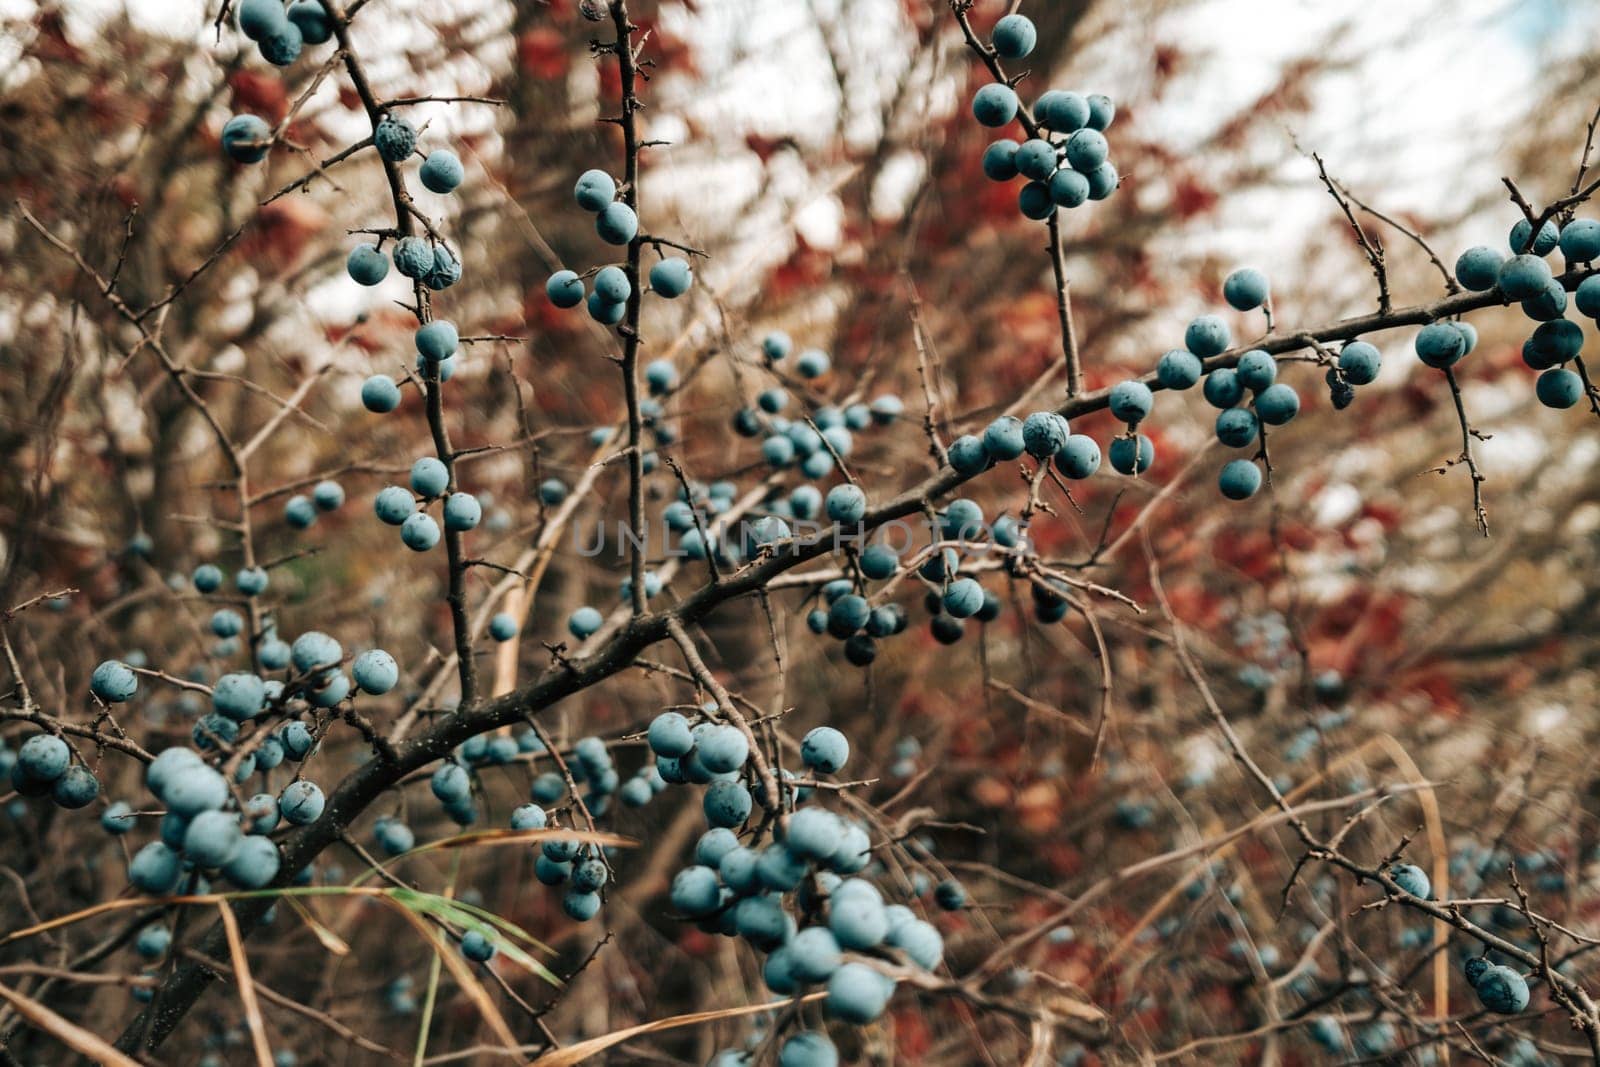 Wild acid ripe sloe - Prunus spinosa in autumn nature. Botany, plants concept. by kristina_kokhanova